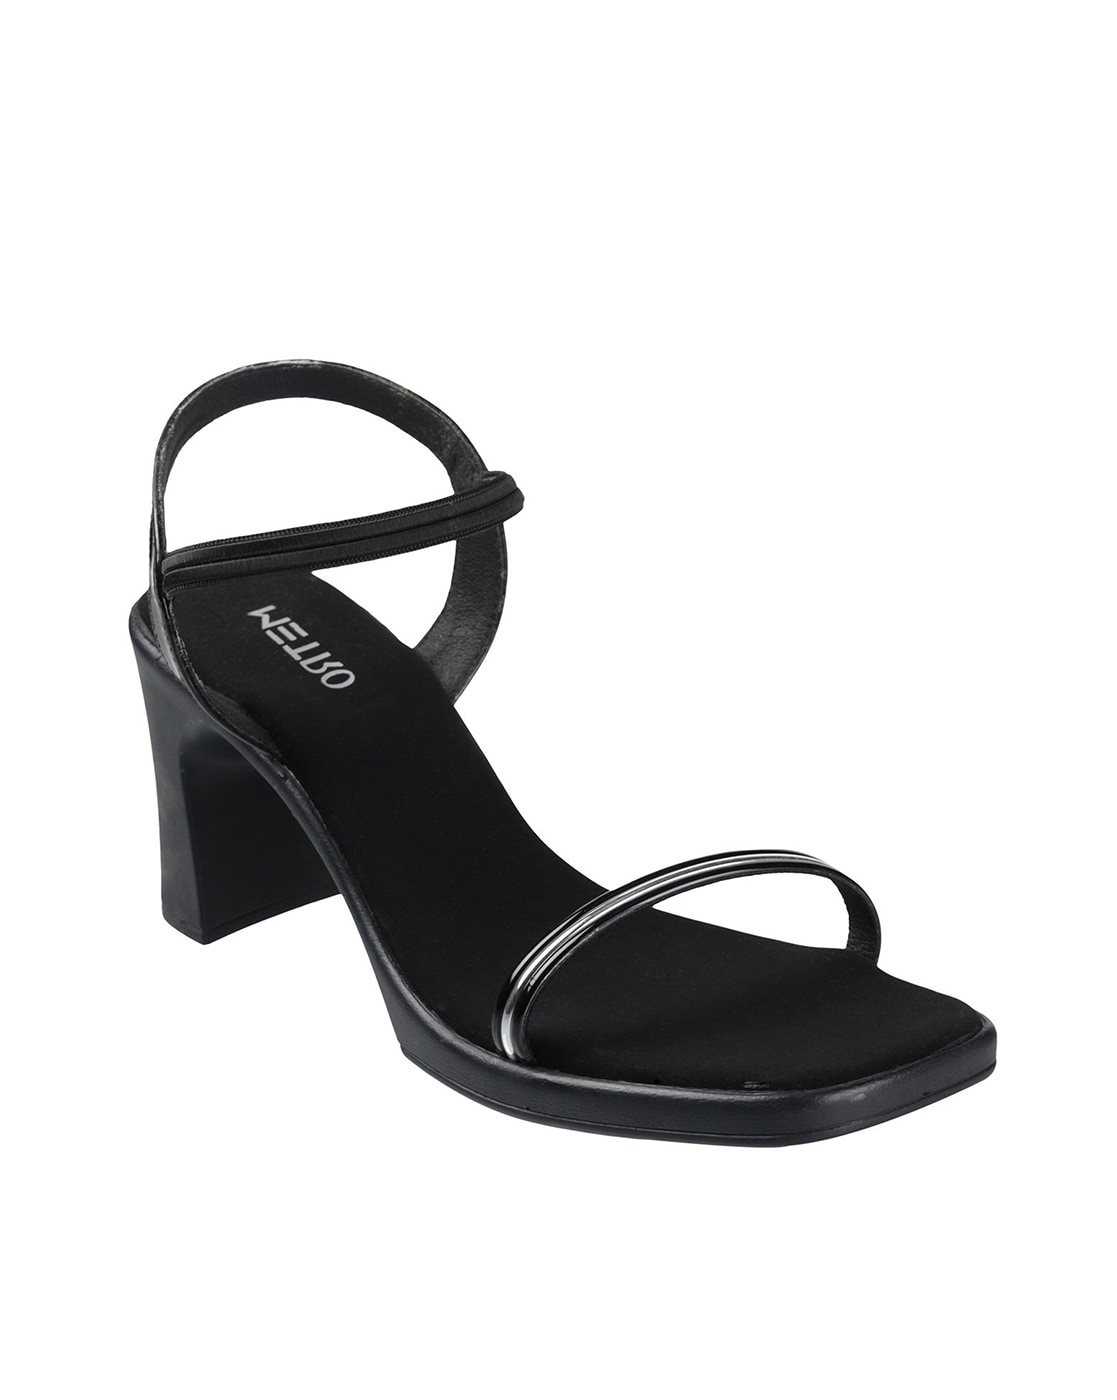 Crocs Women's Black Heeled Sandals Size 9 US Strappy Shoes | eBay